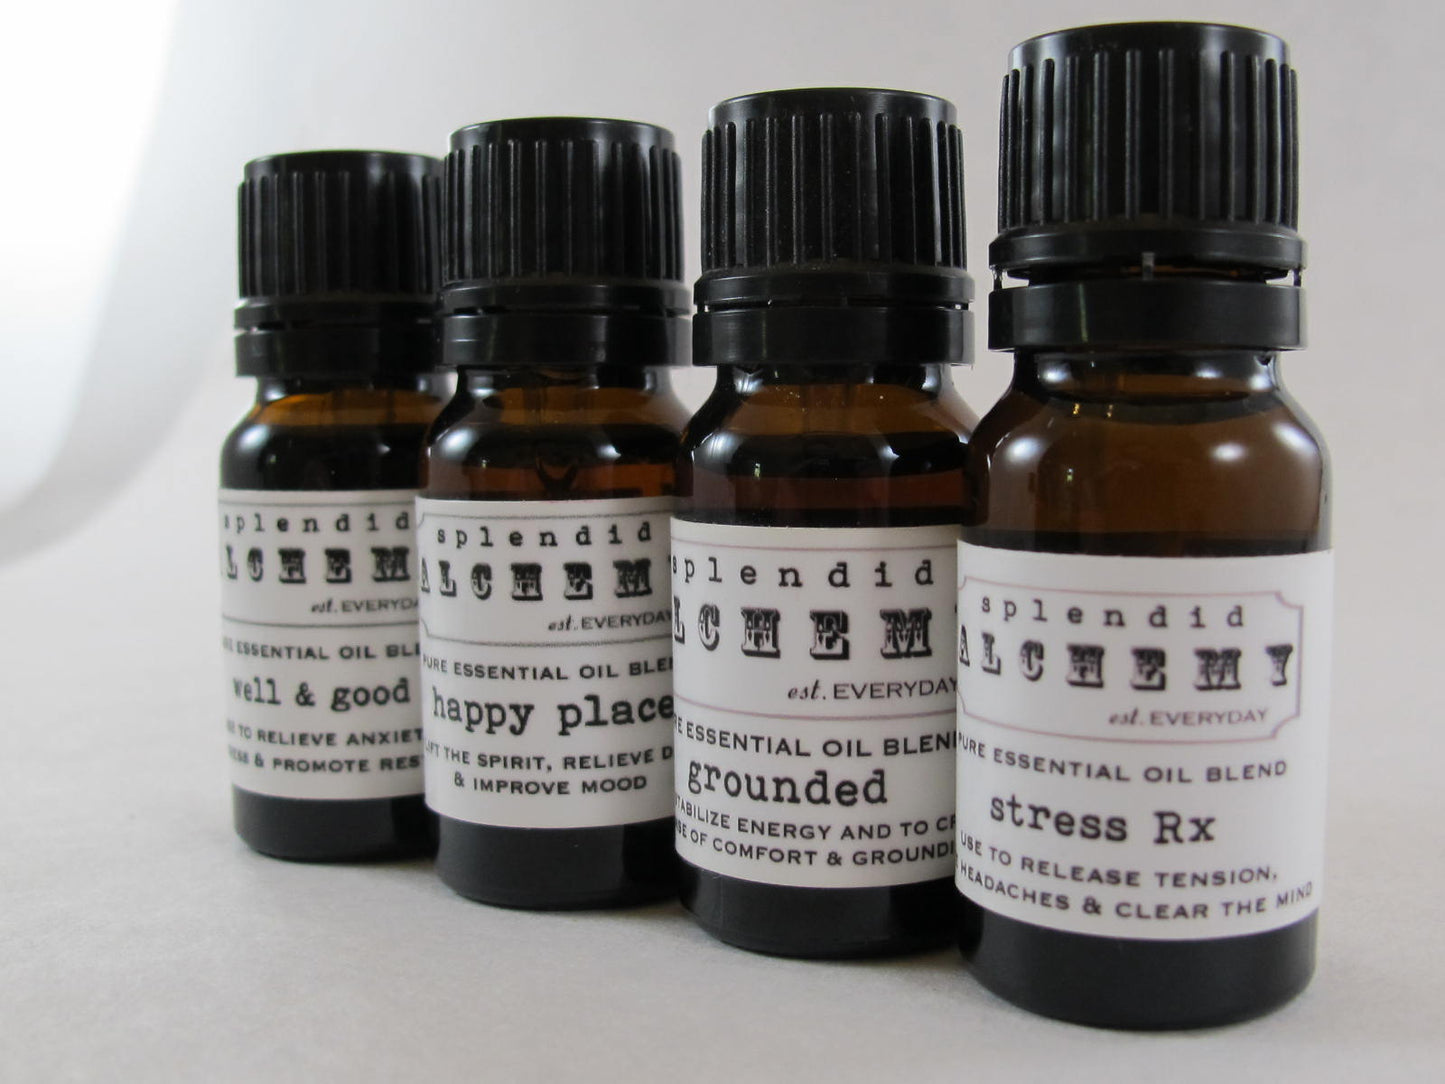 bottles of Spendid Alchemy stress rx oil